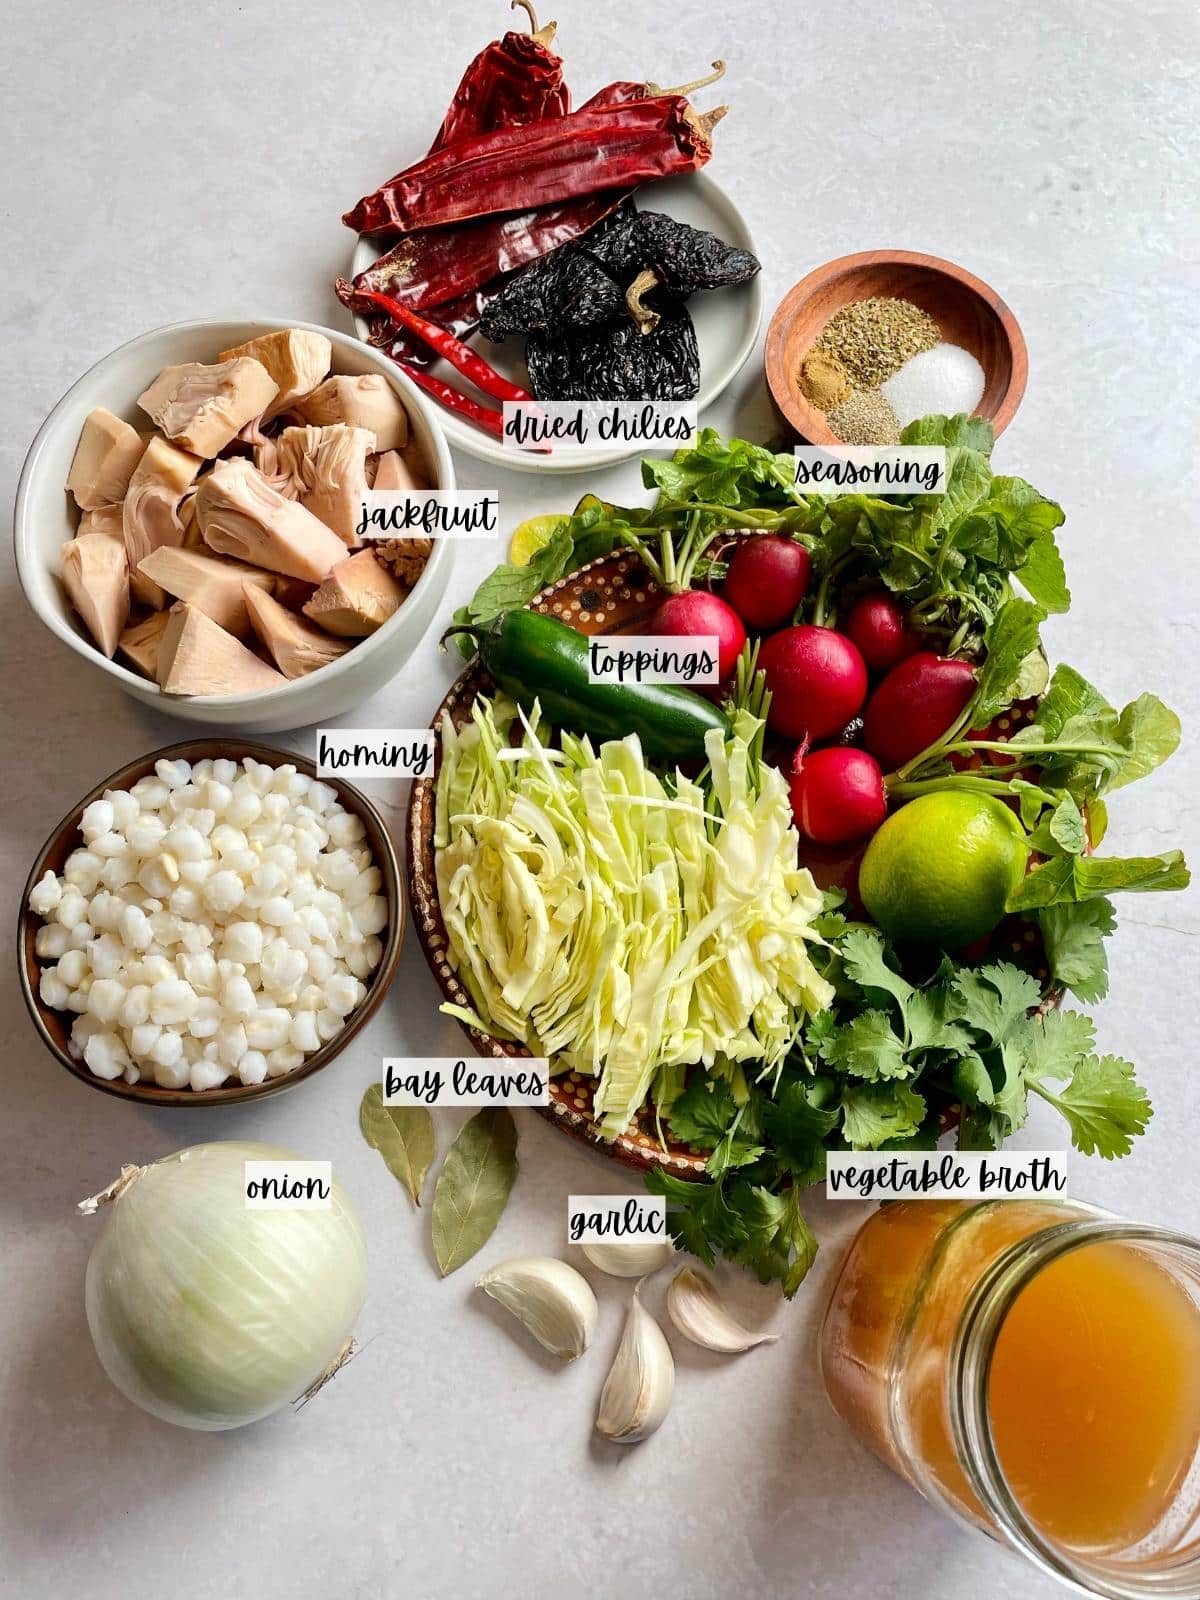 Labeled ingredients for vegan pozole.